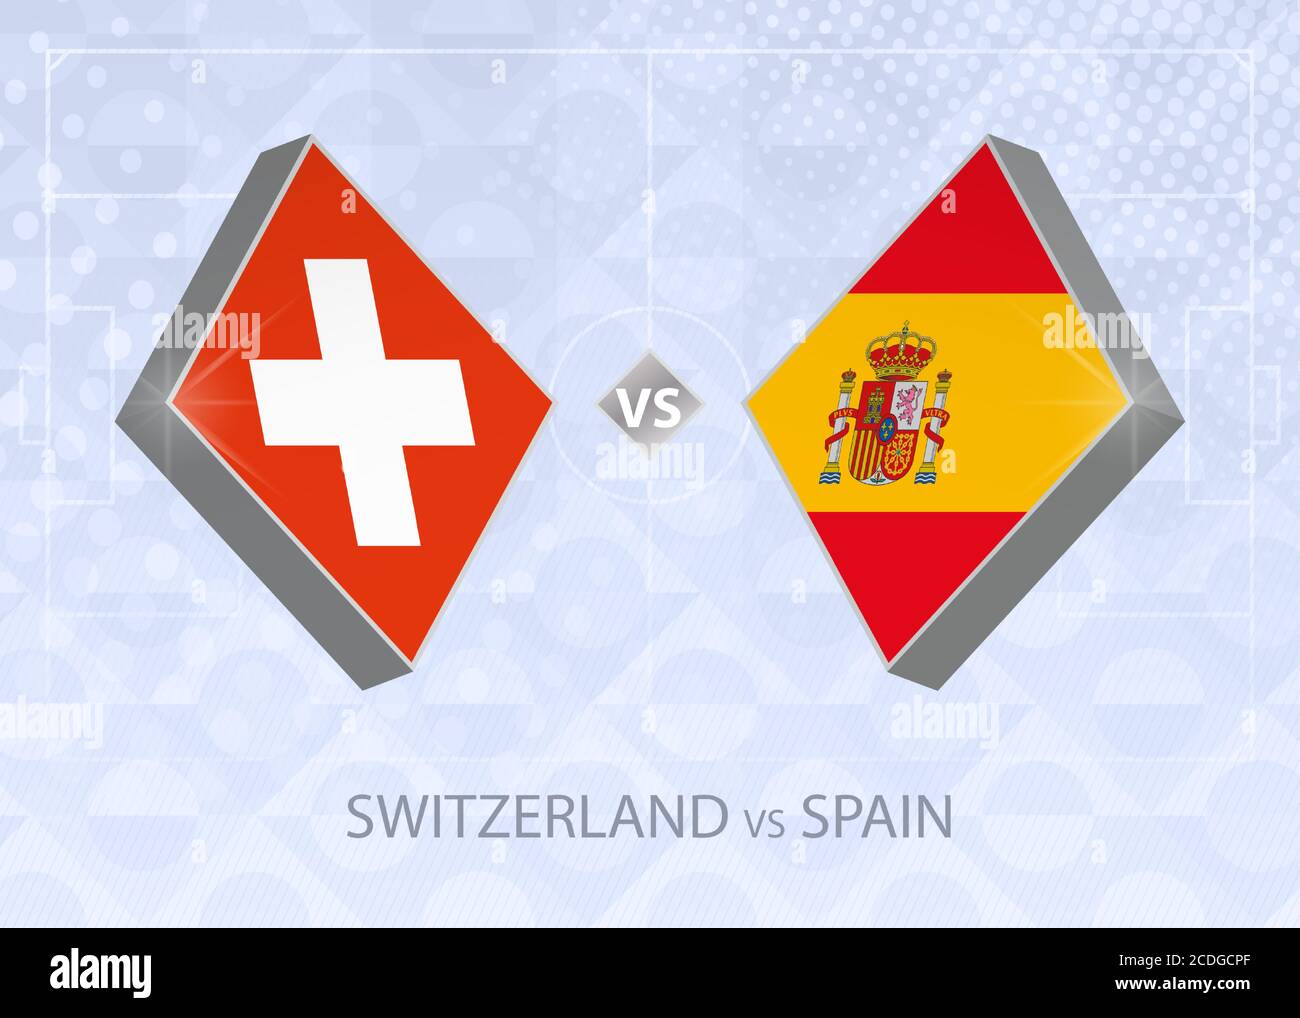 Spain vs switzerland